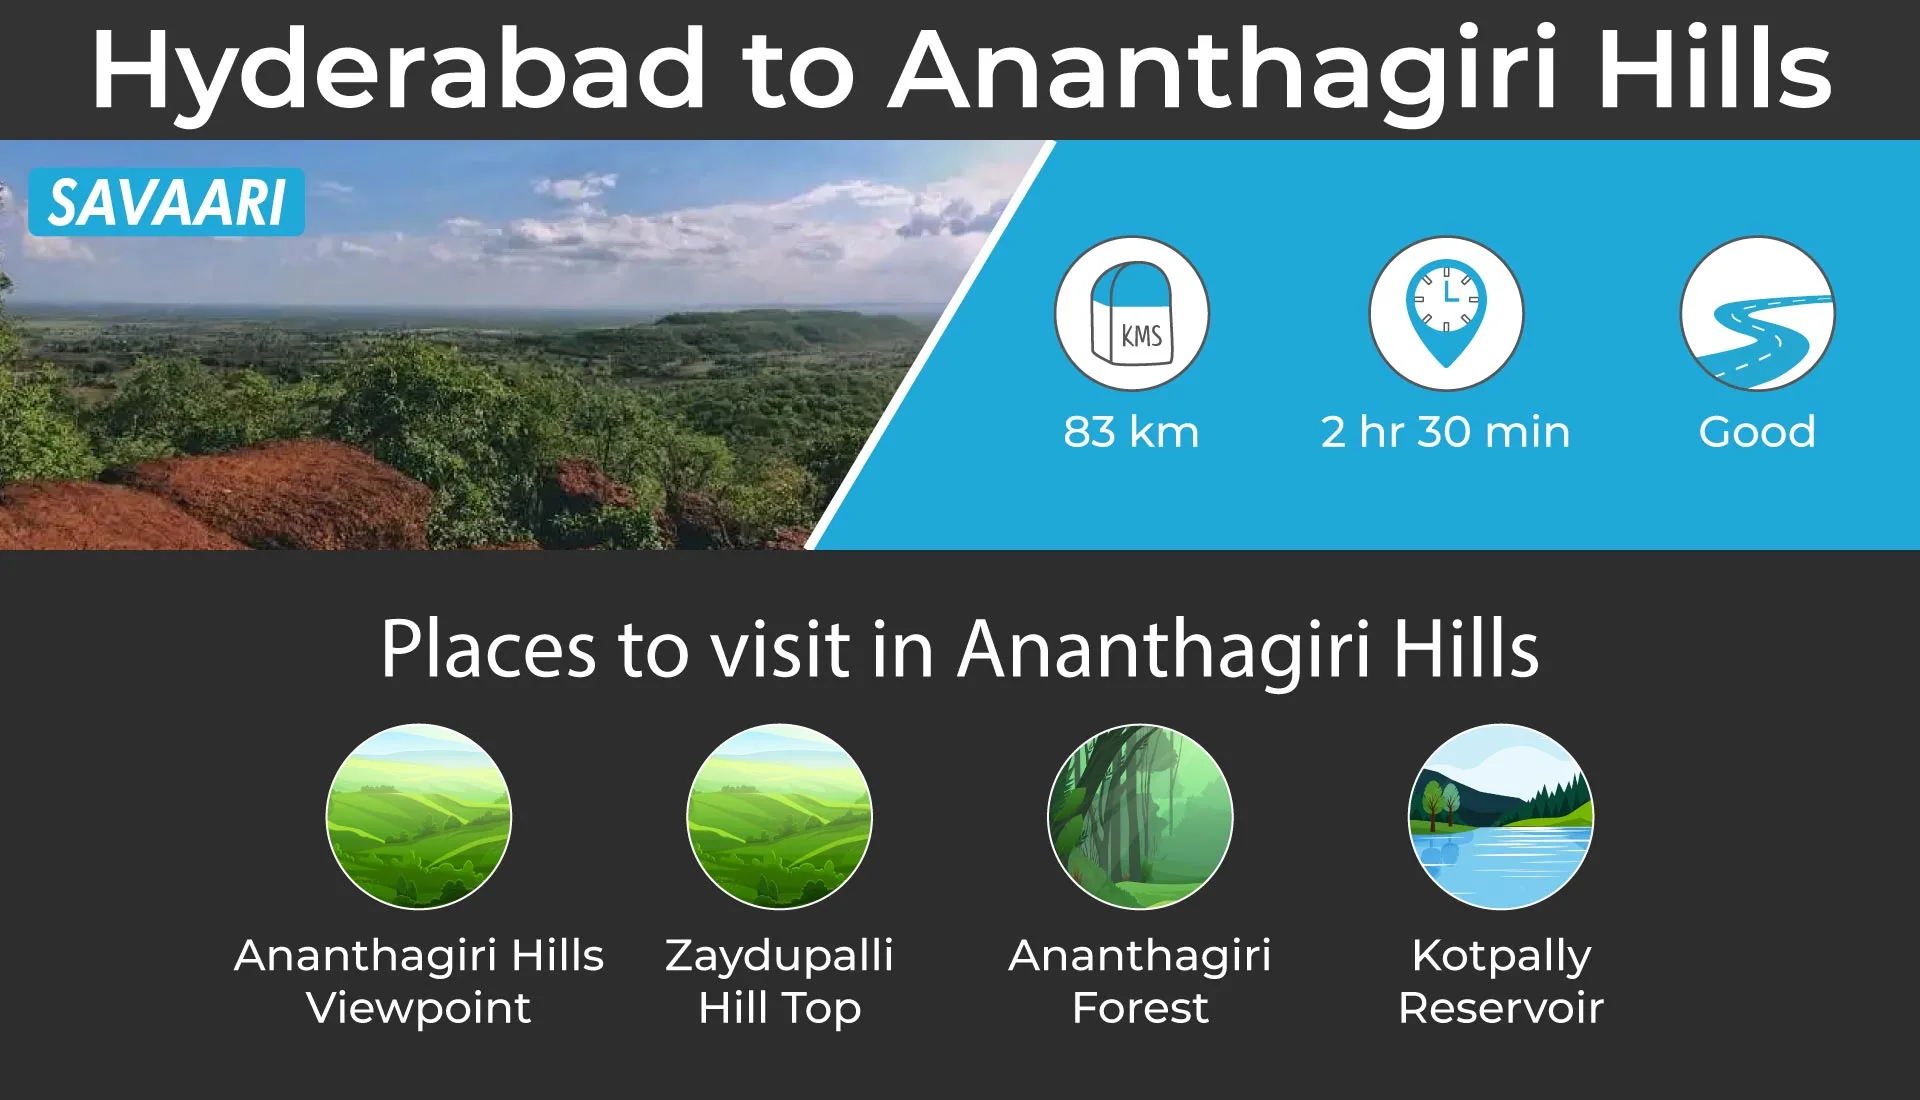 Ananthagiri hills romantic getaway from Hyderabad